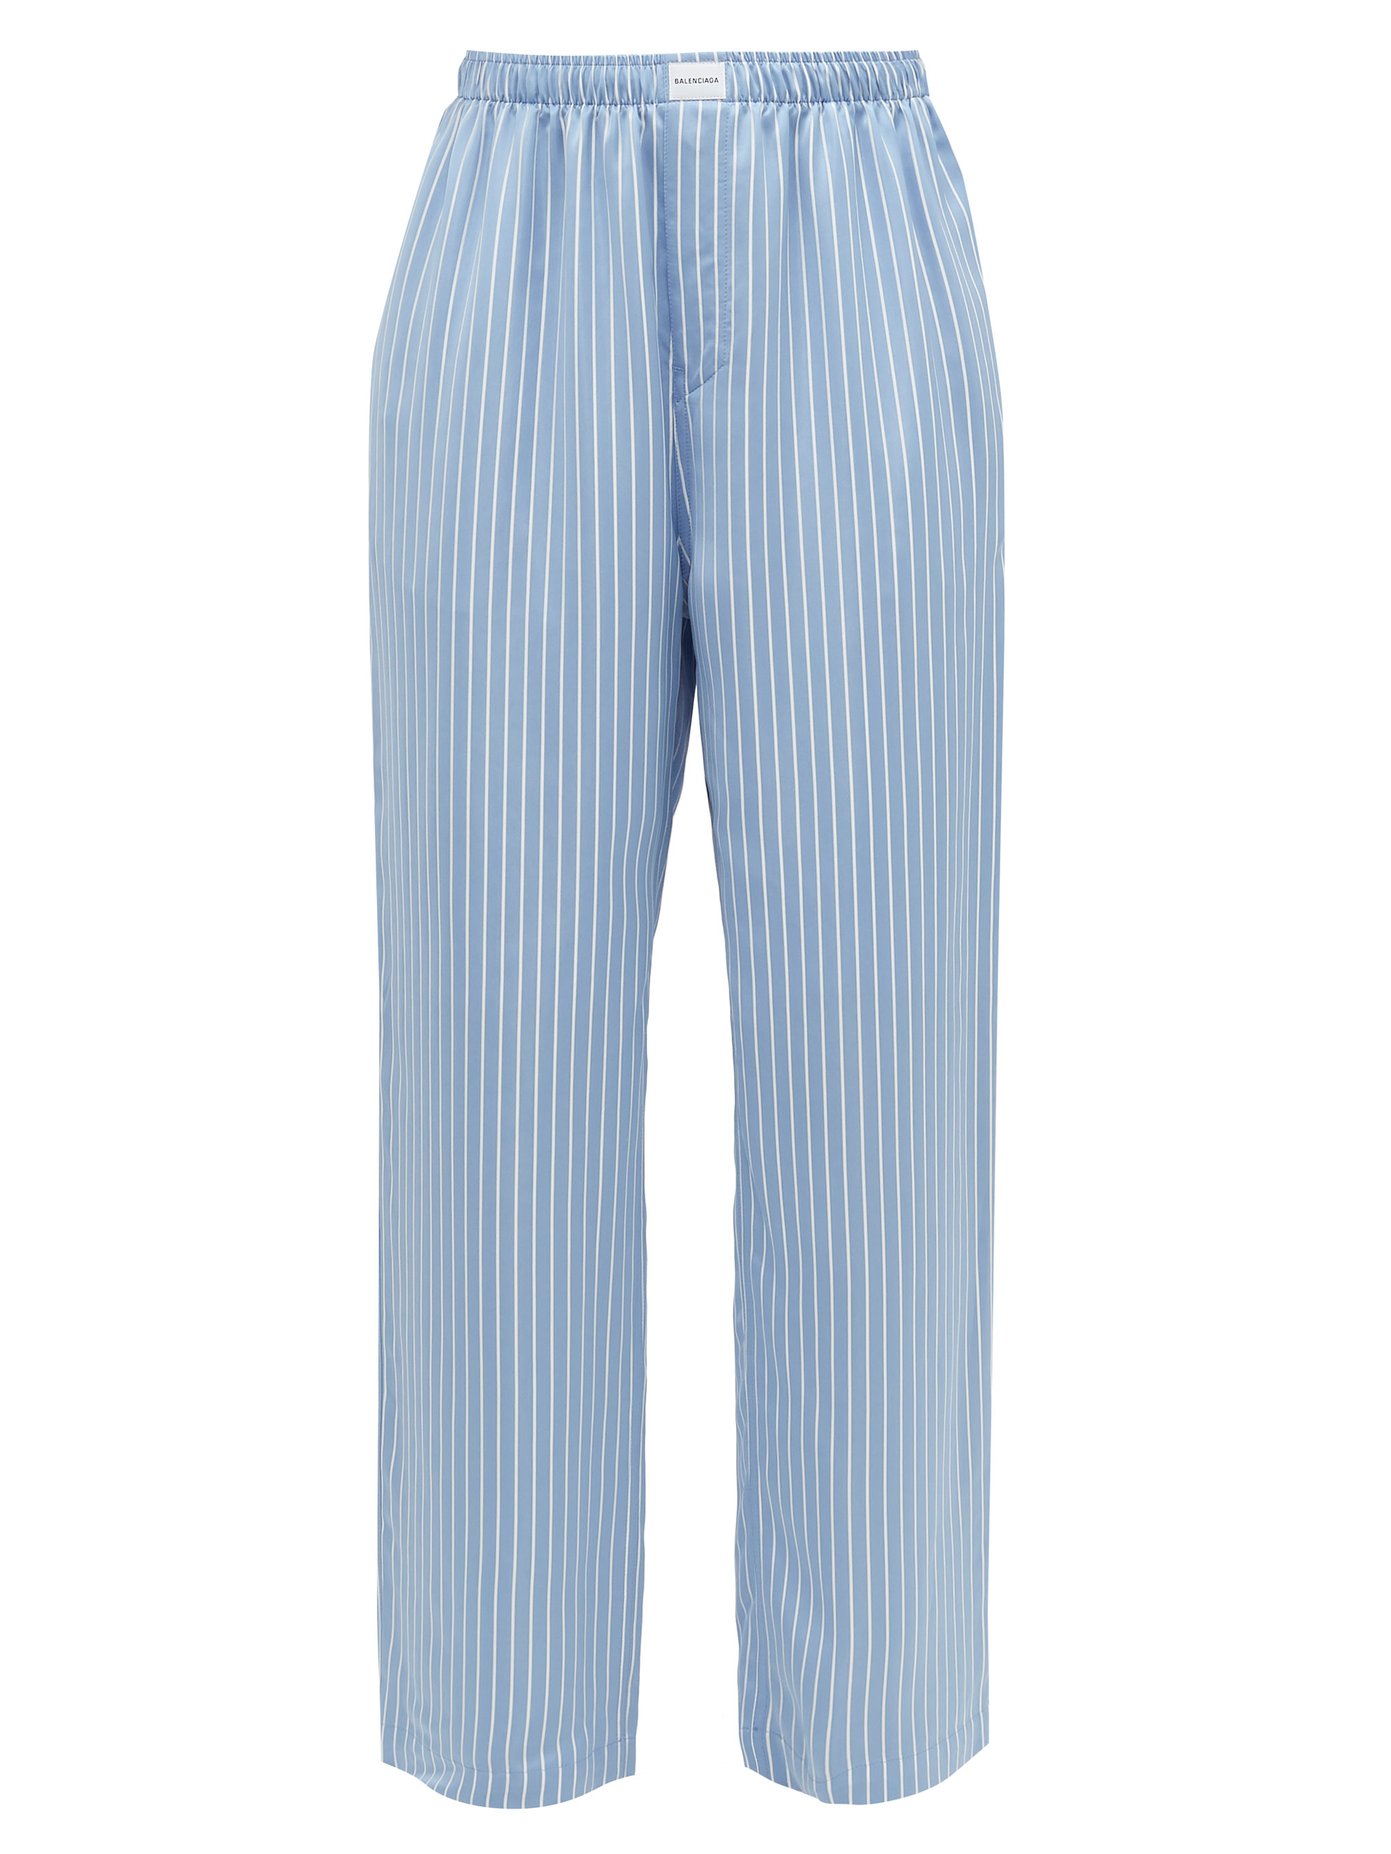 balenciaga striped pants